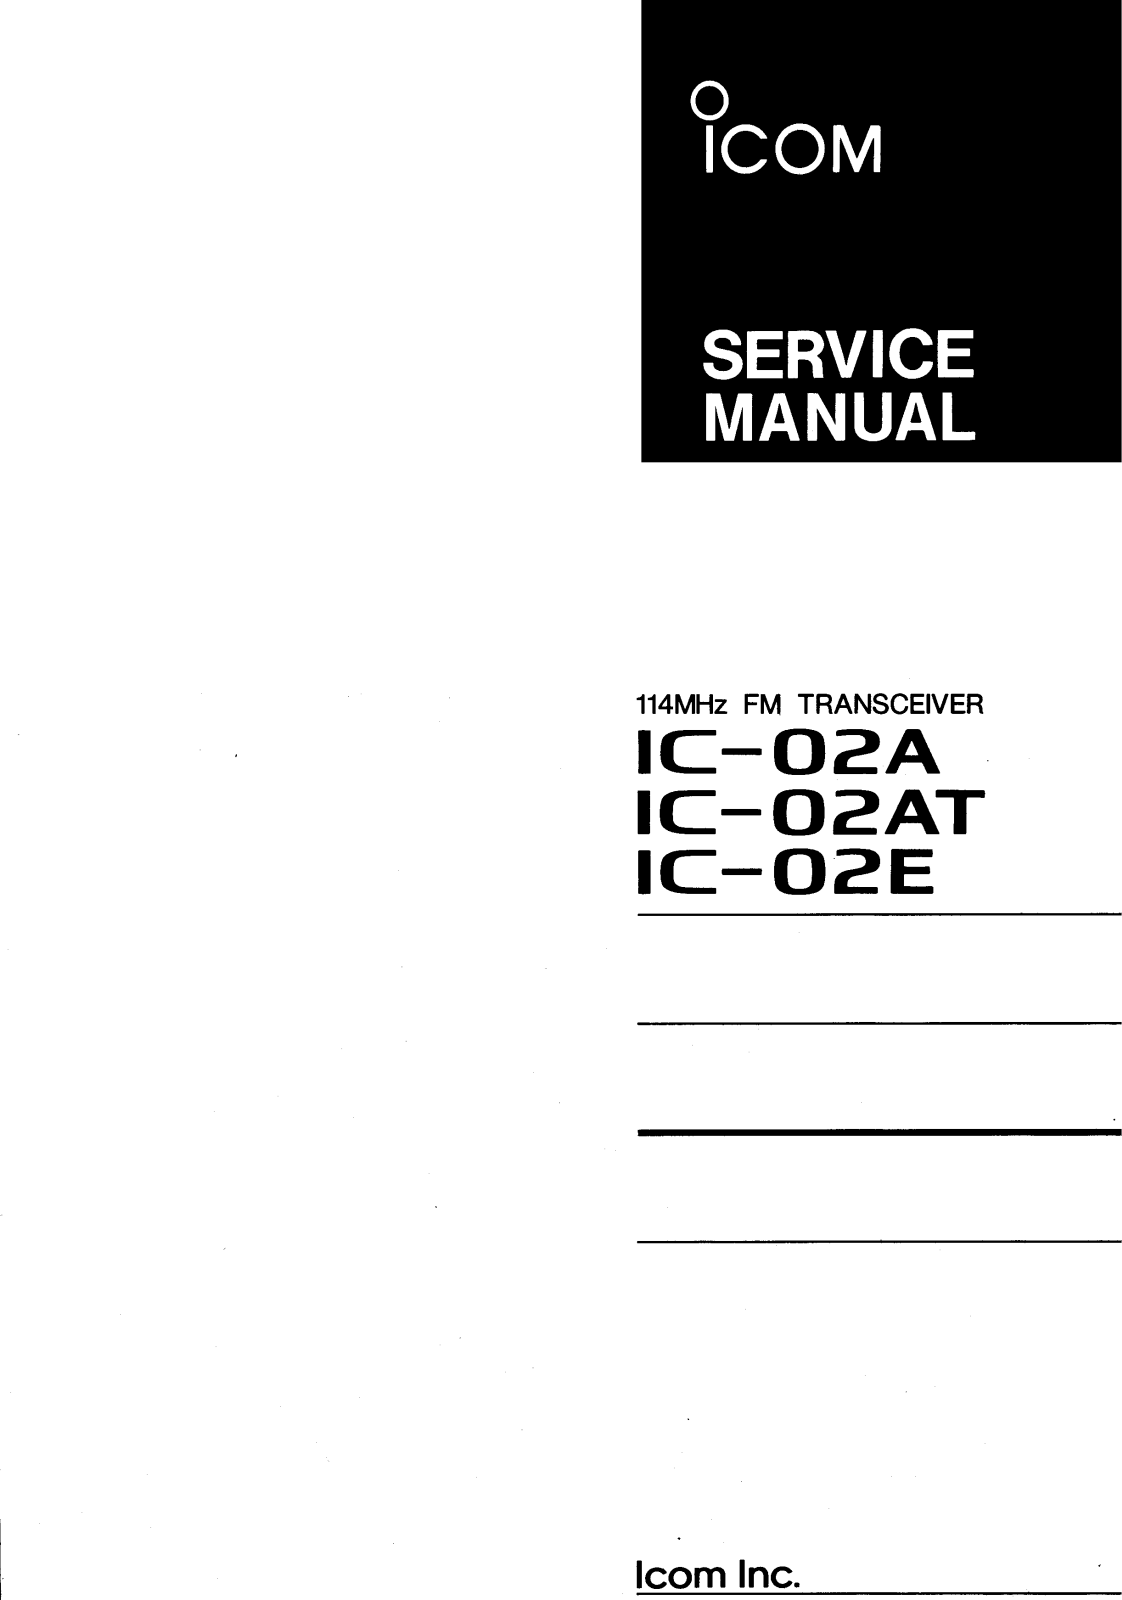 Icom IC-02E, IC-02AT, IC-02A Service Manual